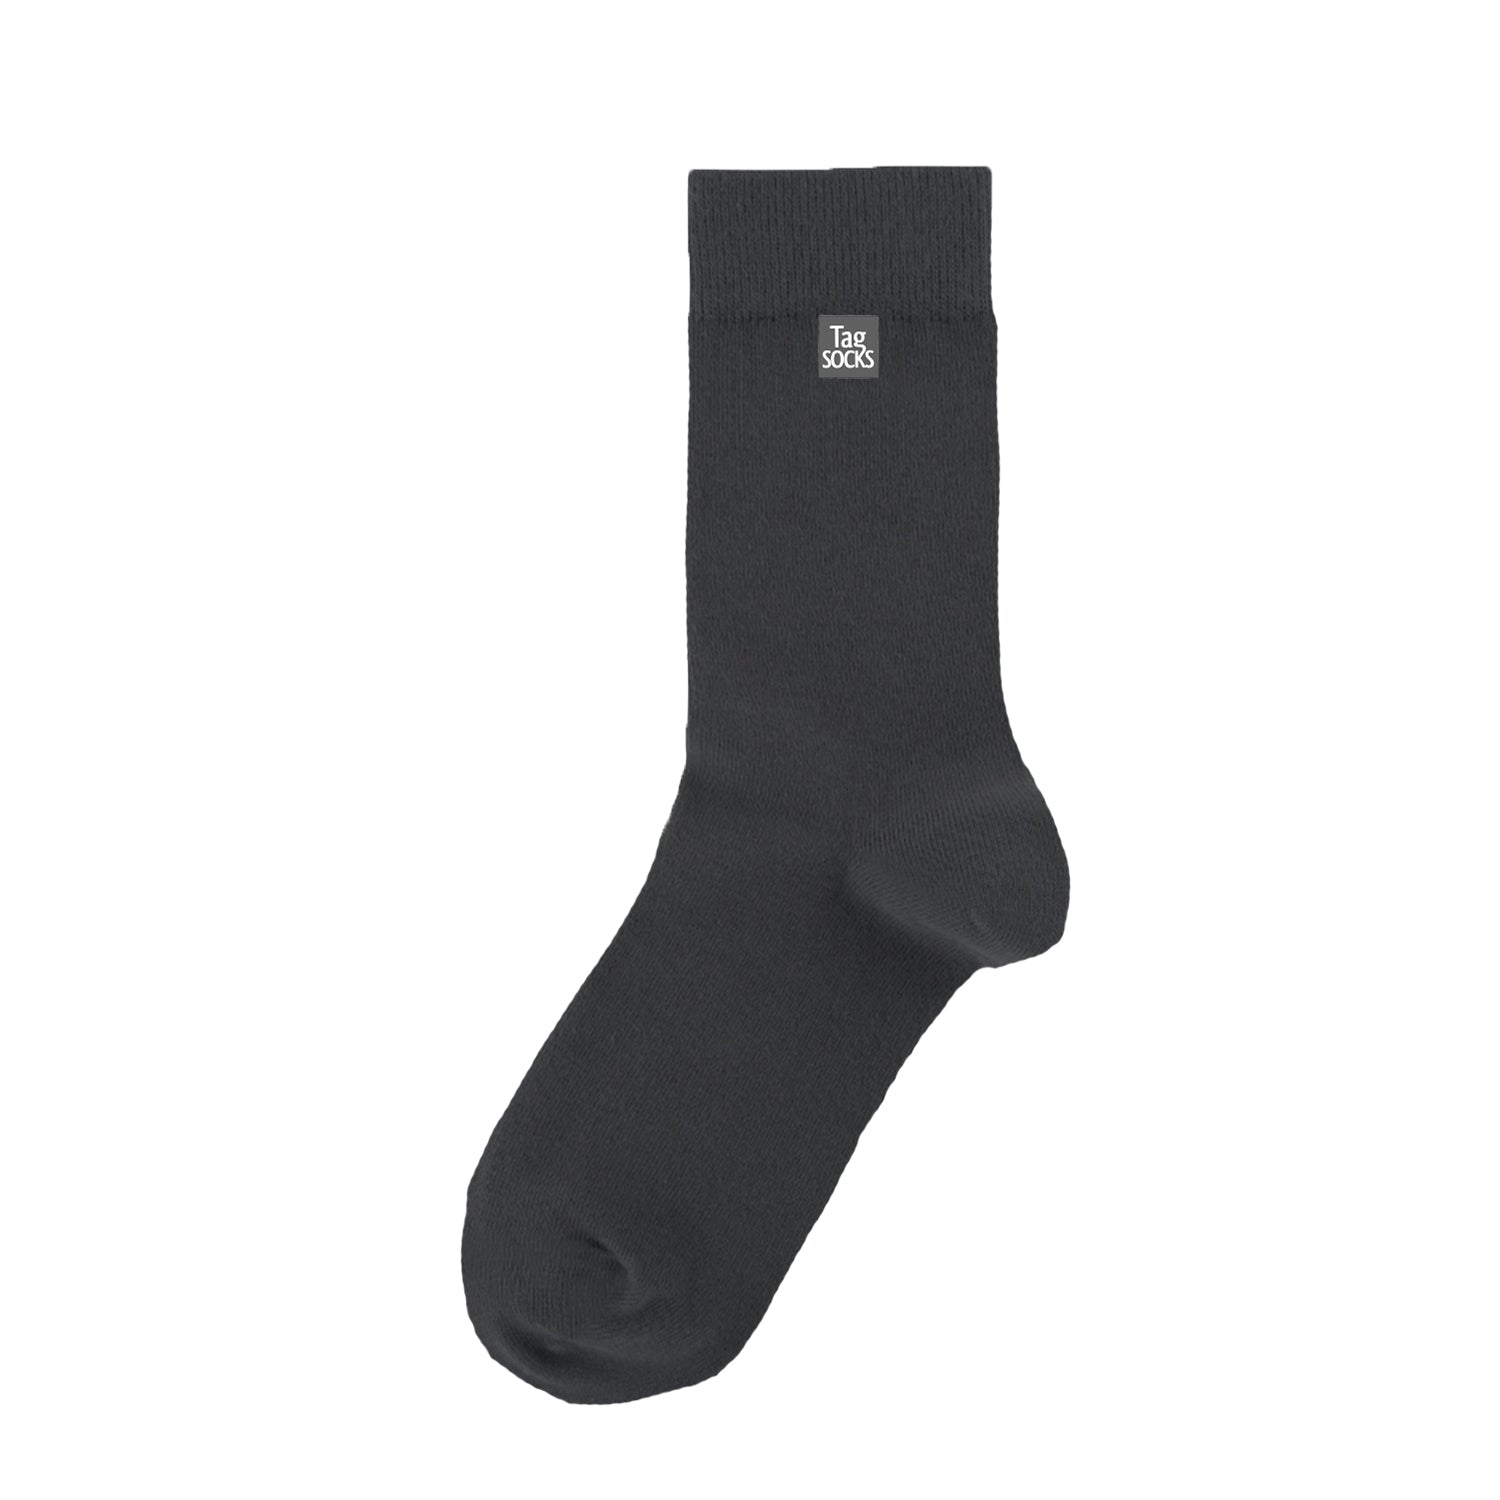 Grey sock from tag Socks